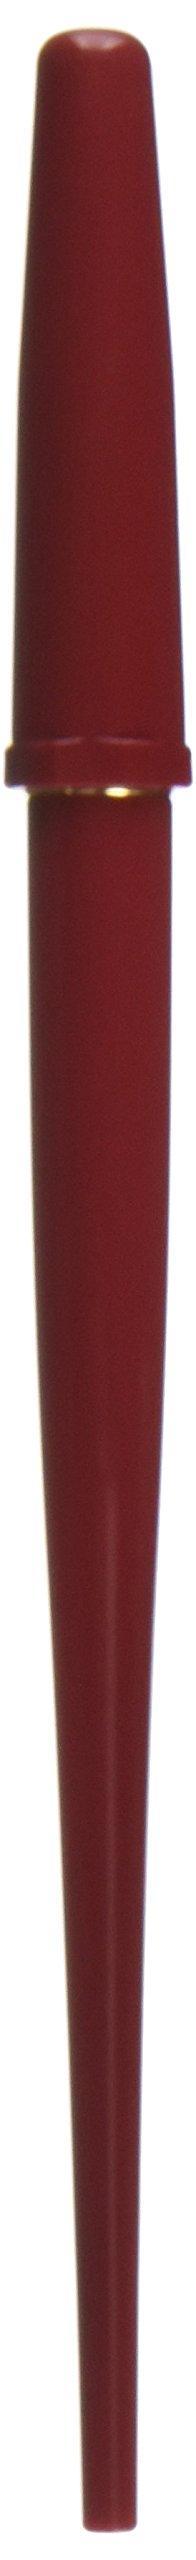 Pilot Fountain Pen Extra Fine Nib Red Body DPN-70-R-EF Fine Desk Fountain Pen_1